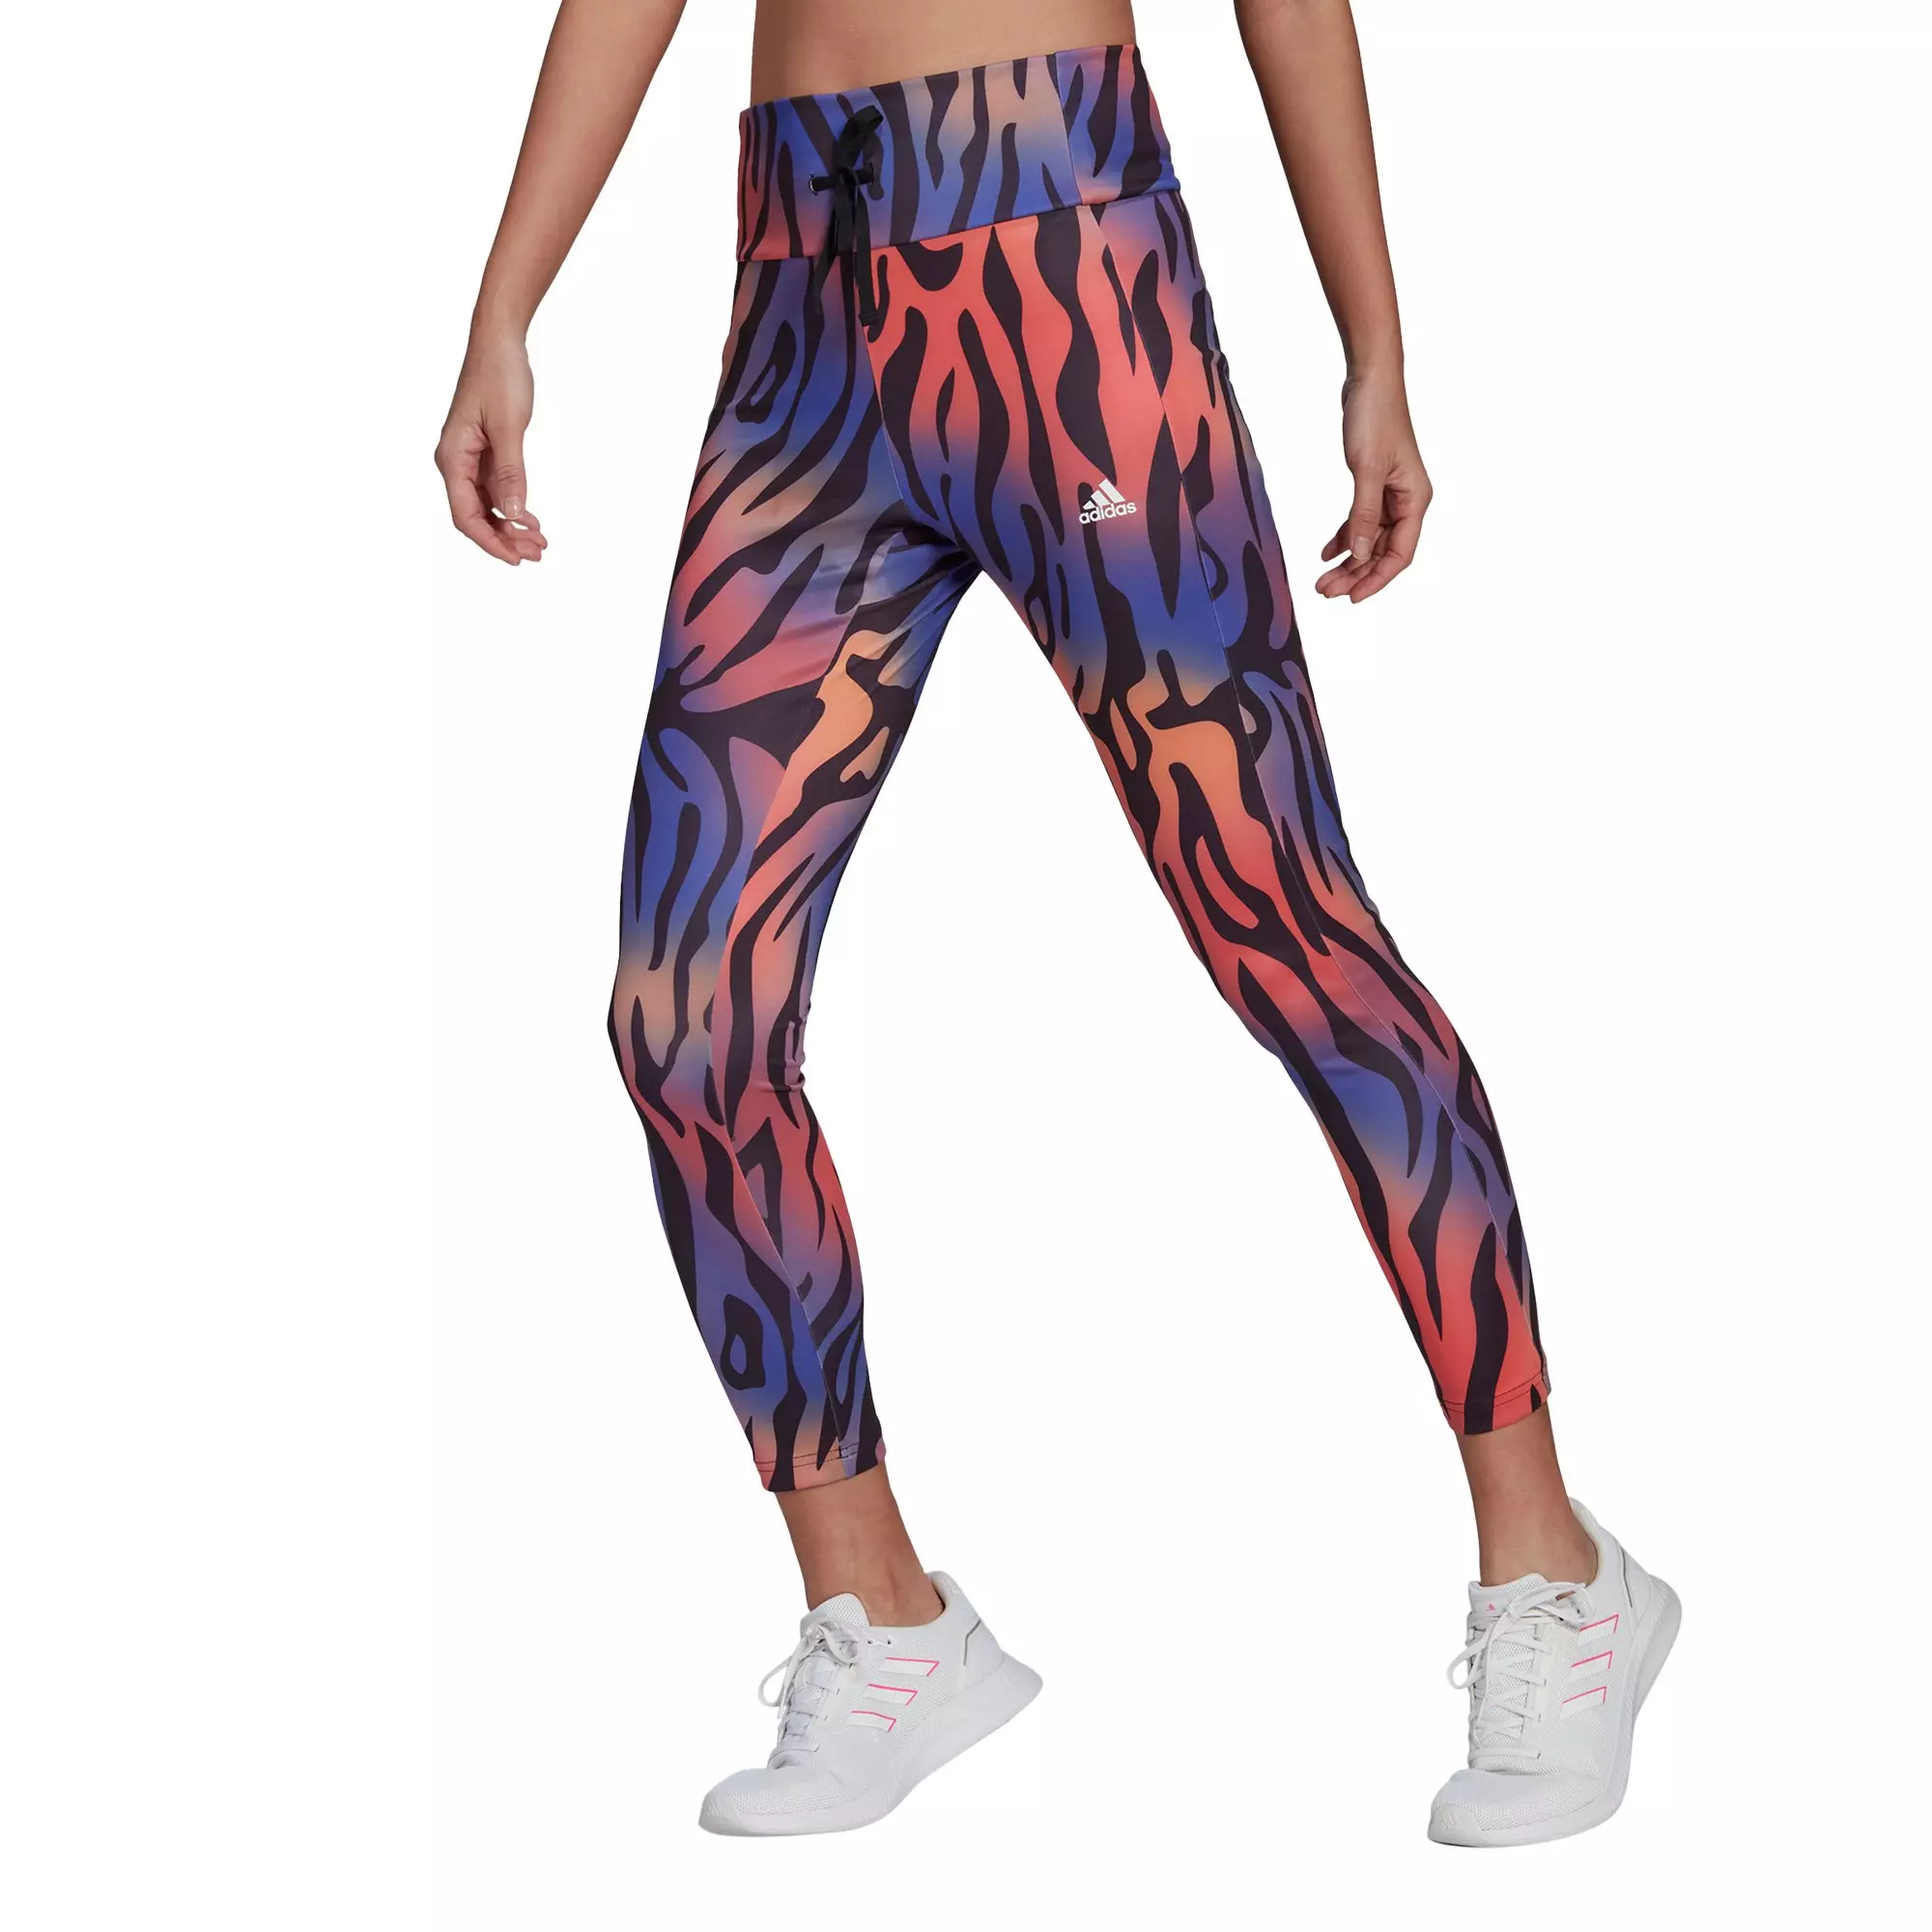 Nike Training Leggings Tight Zebra Print NWT Size 1X